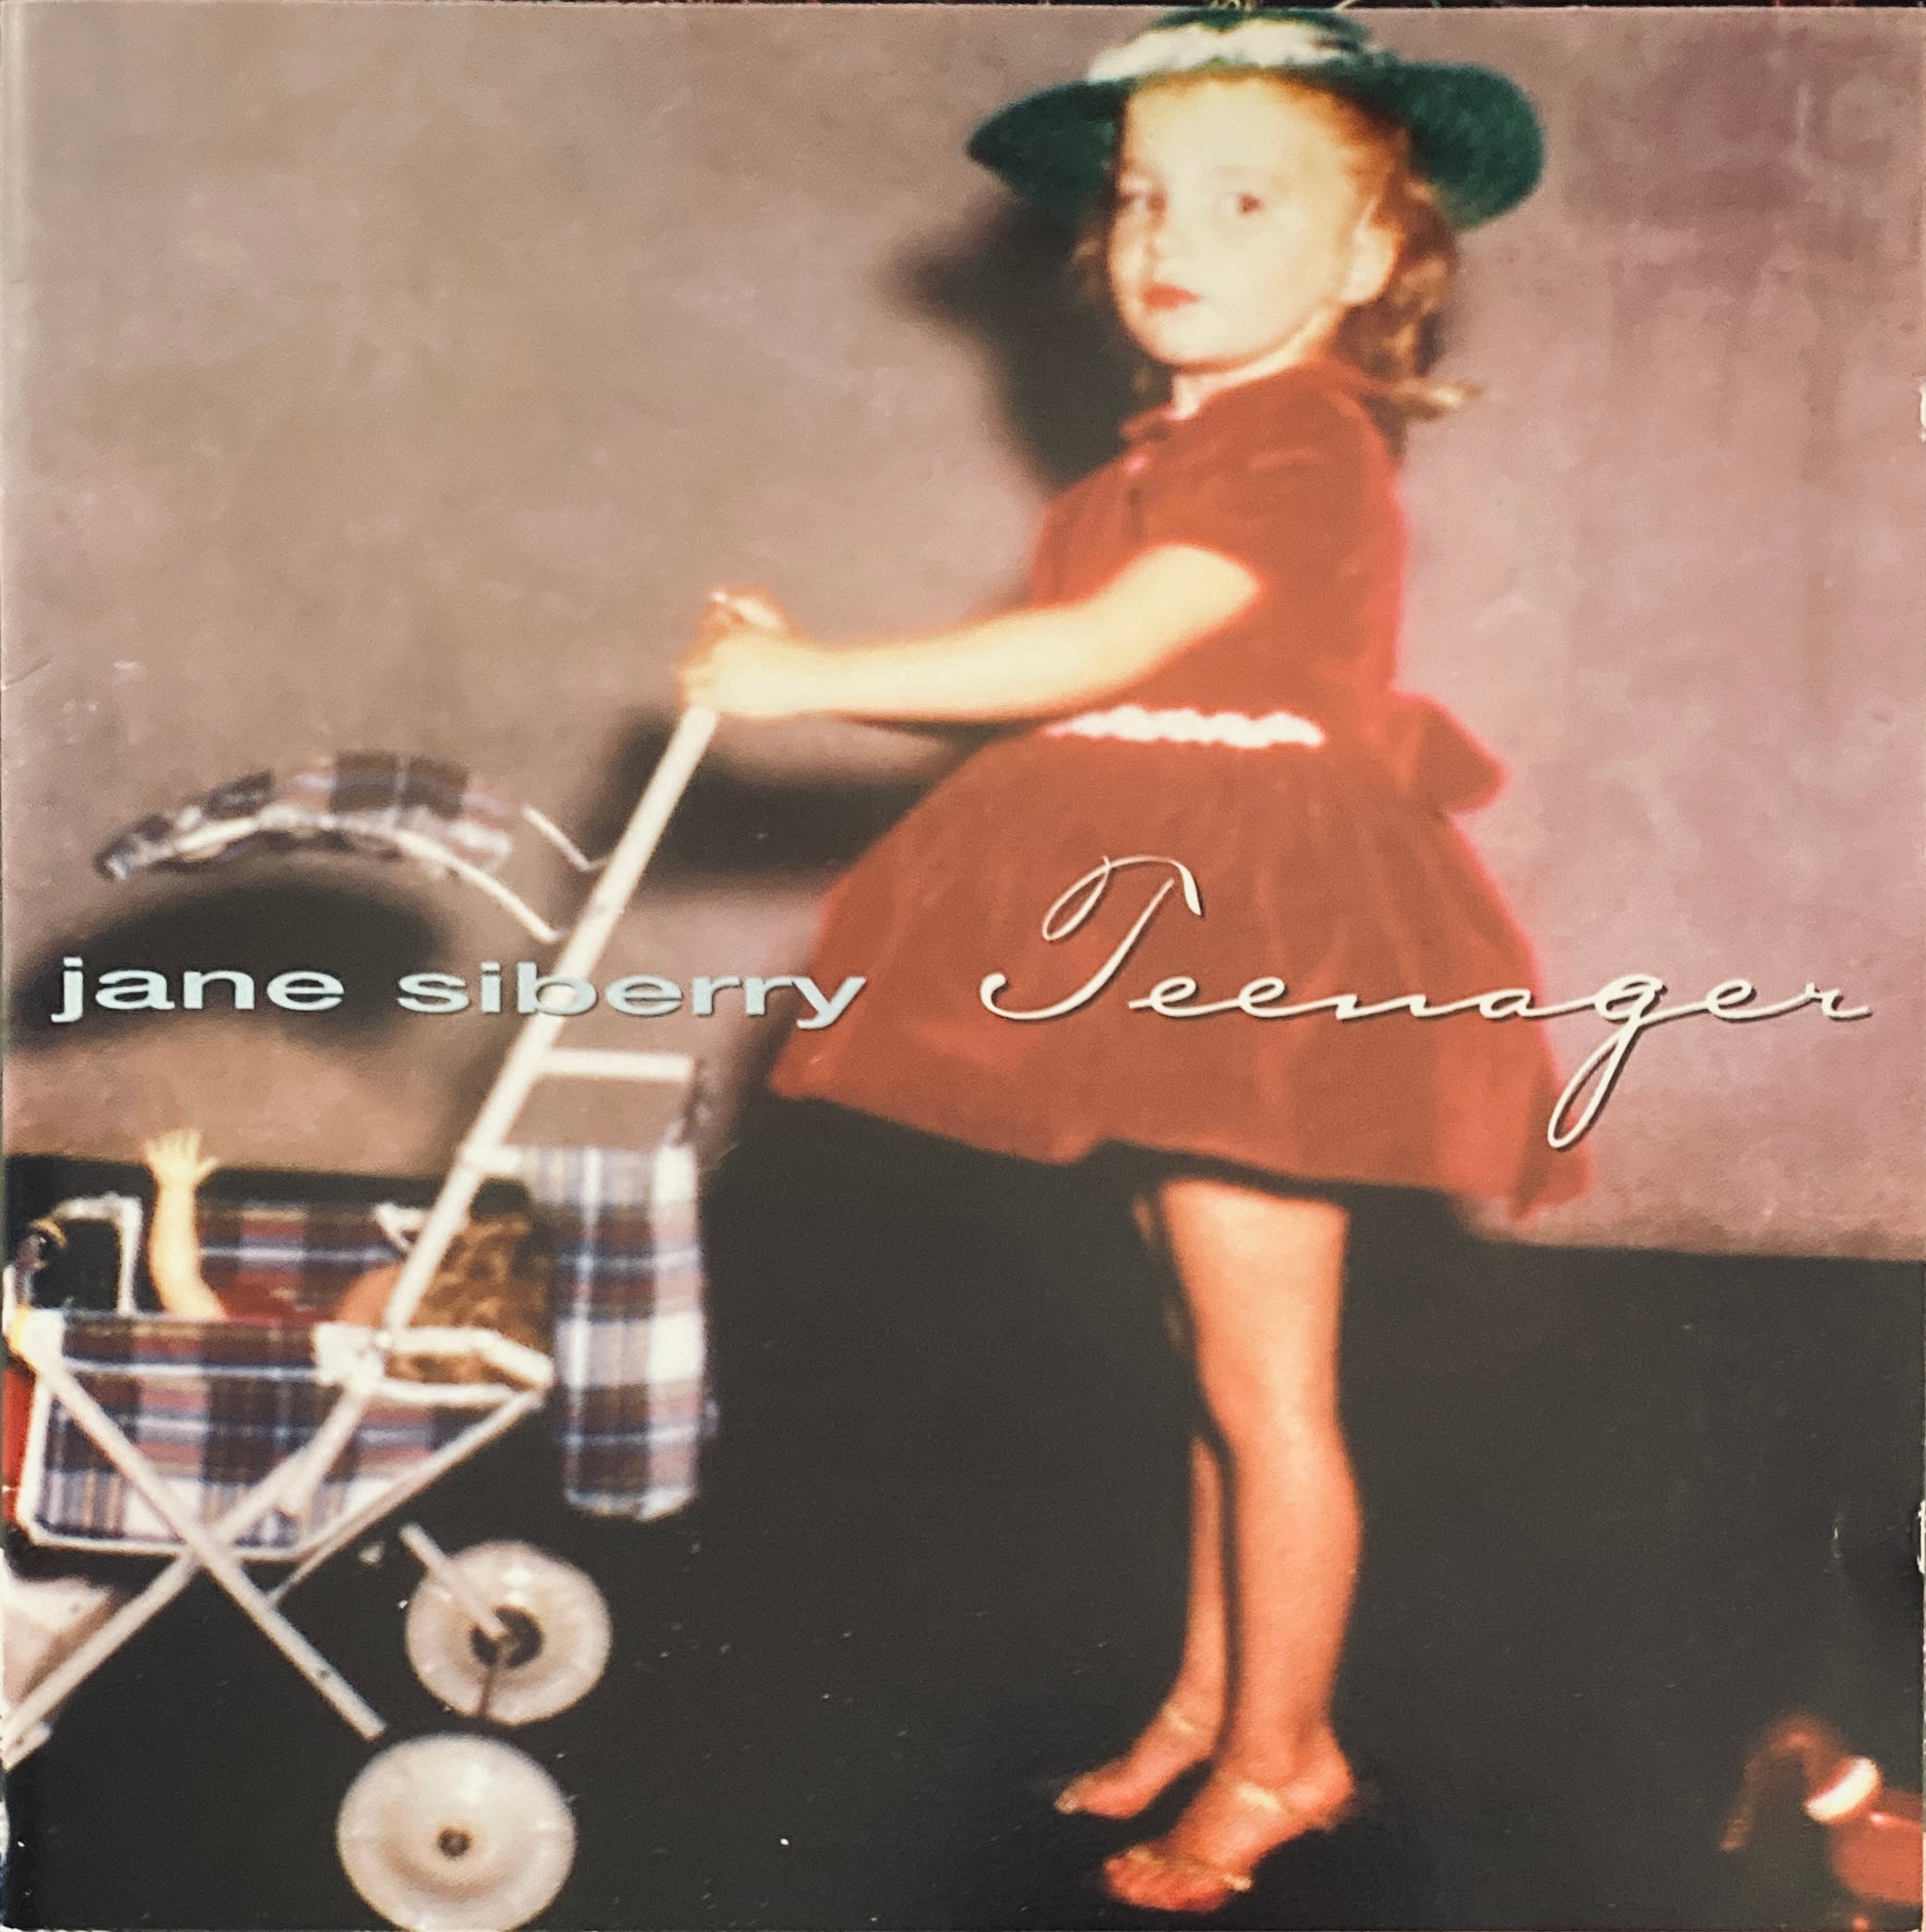 Jane Siberry "Teenager" CD (1996)